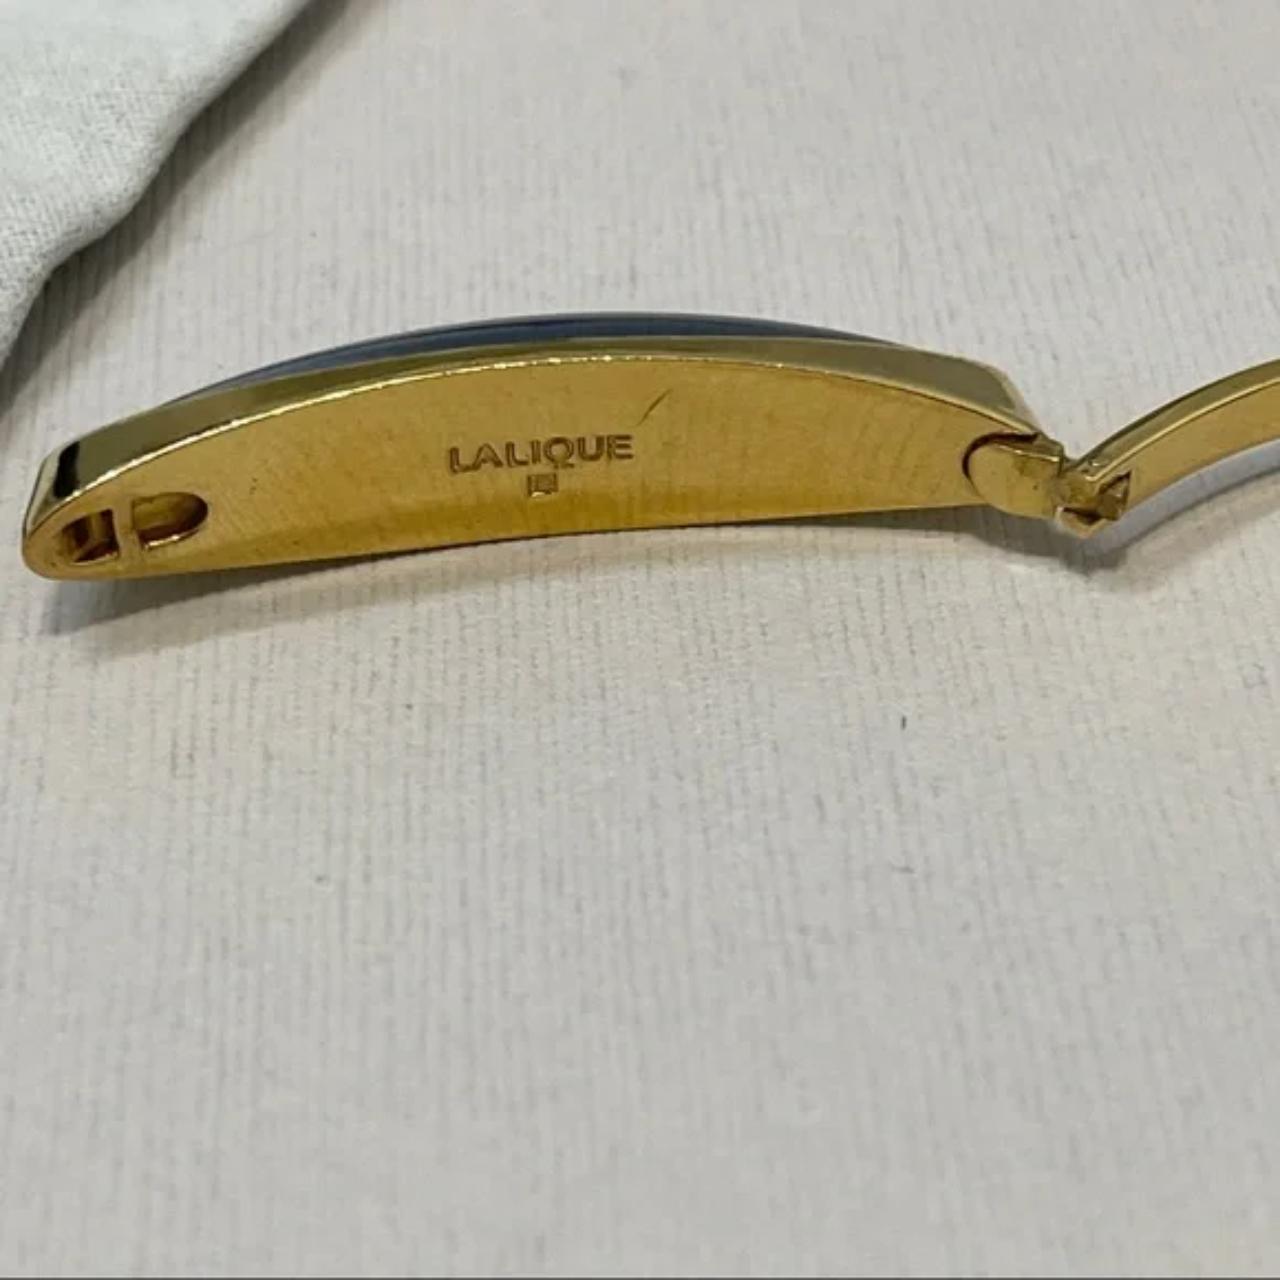 Product Image 3 - Lalique Eclat Crystal Bracelet Bangle

Blue